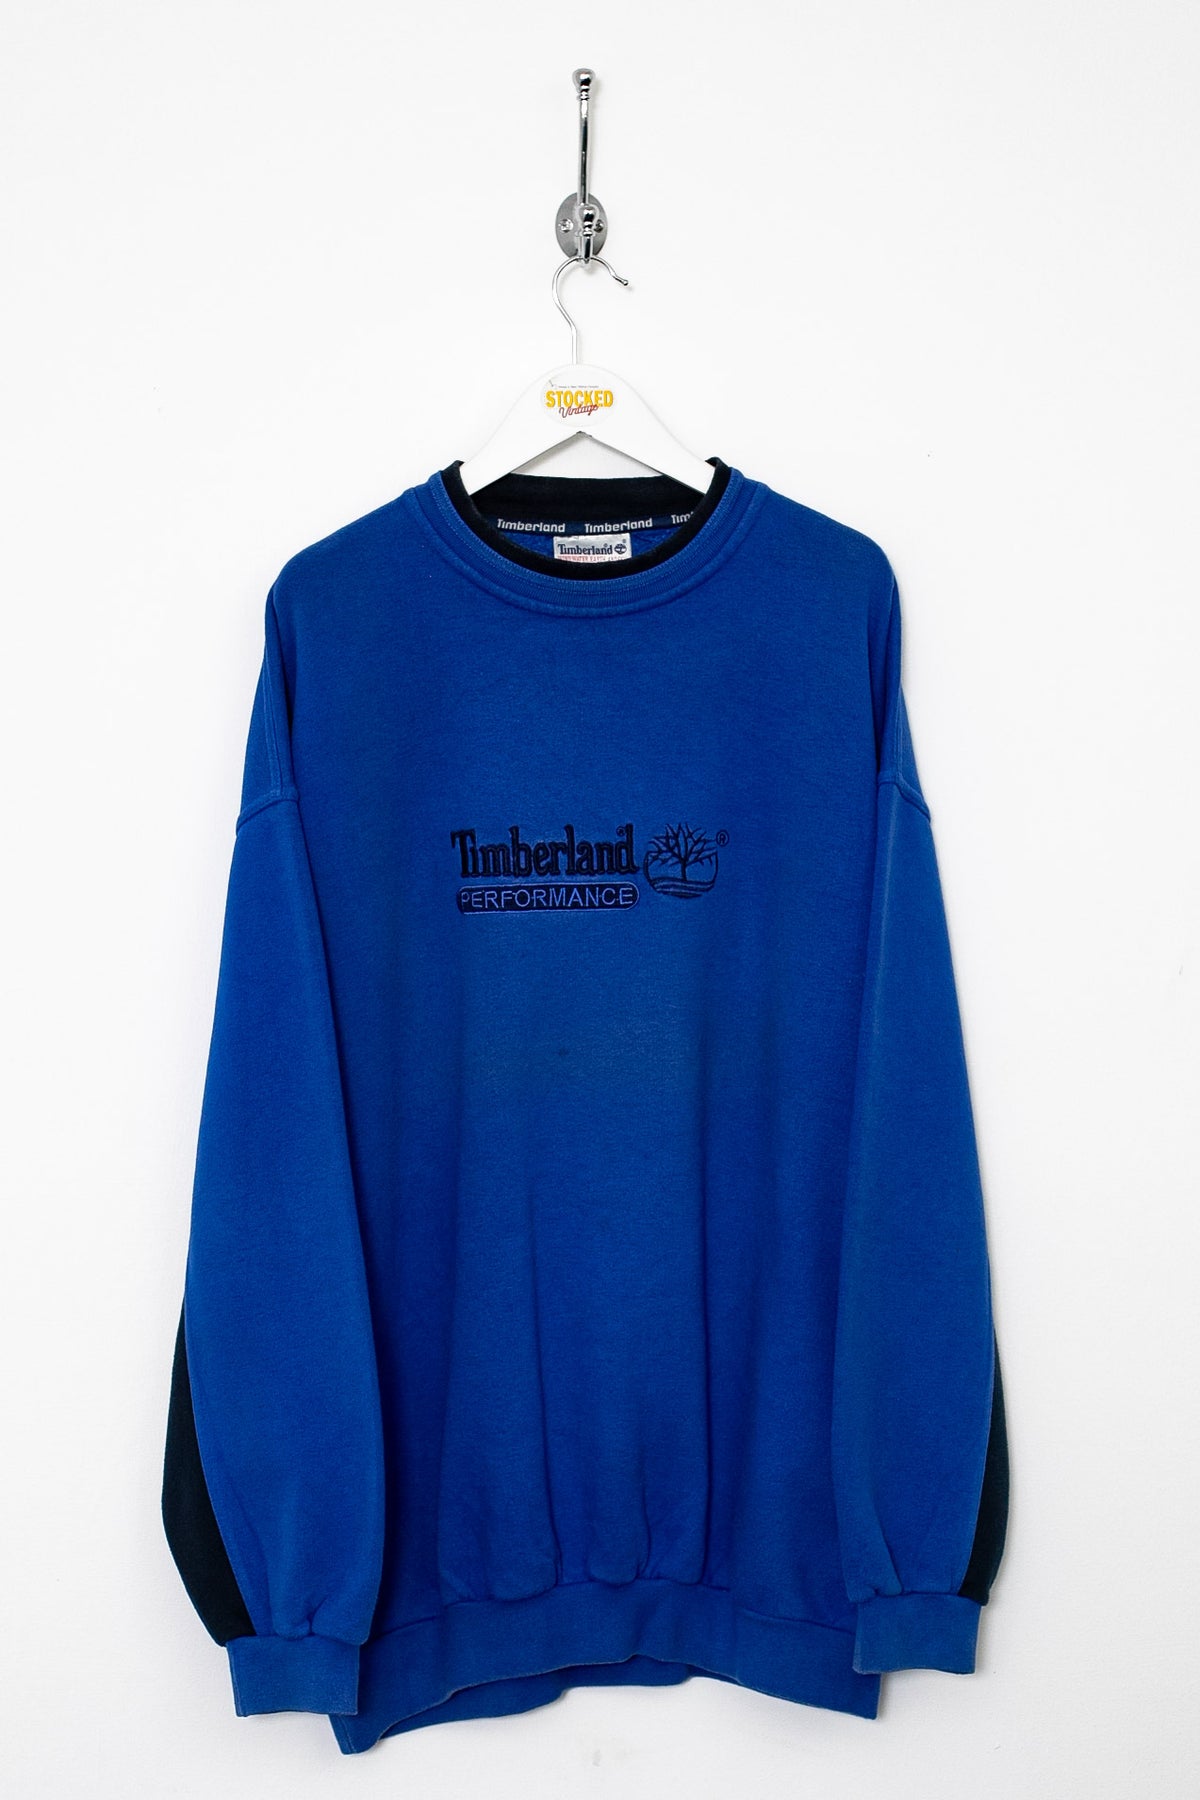 00s Timberland Sweatshirt (XL)